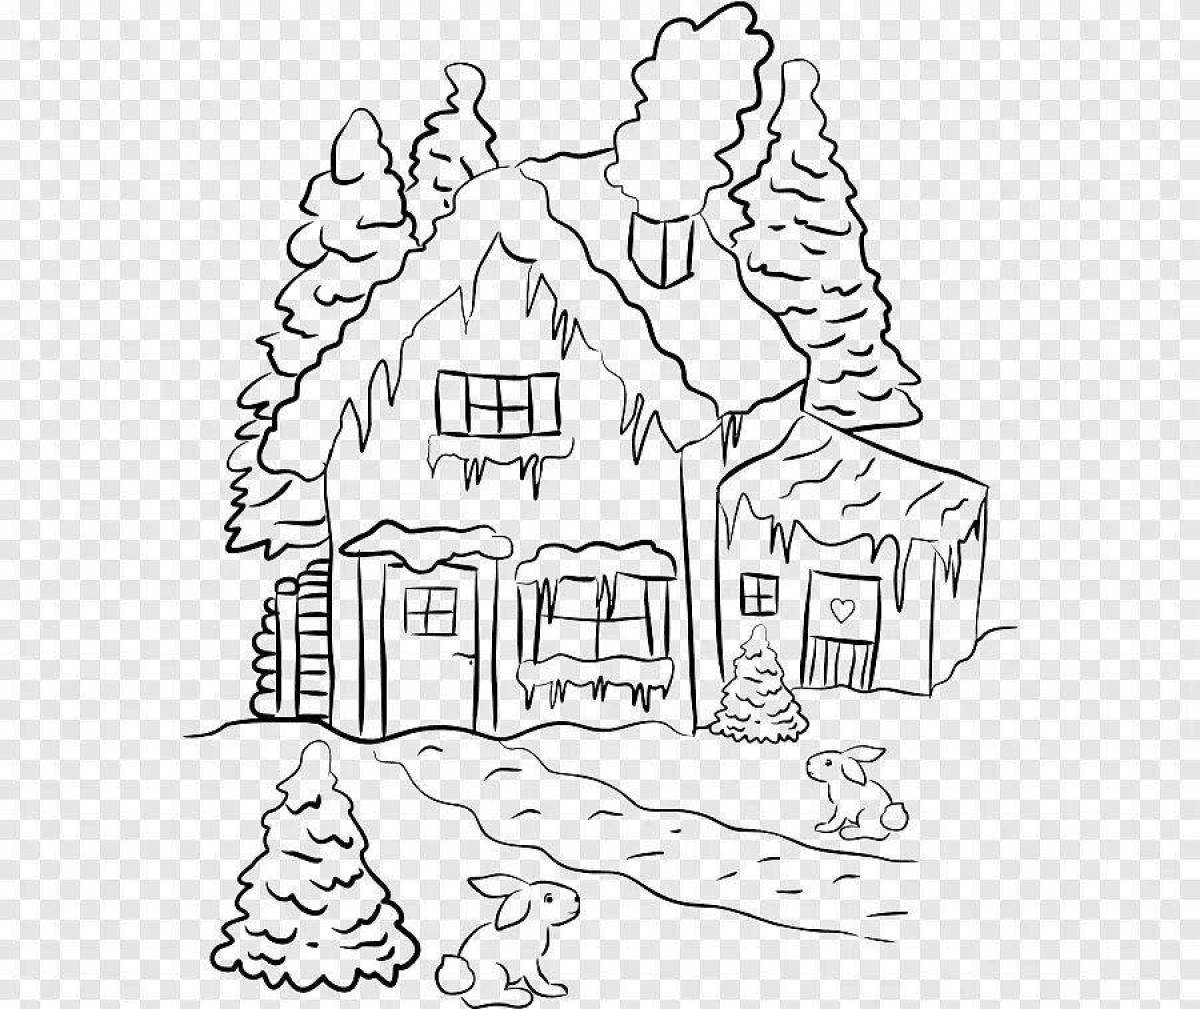 Fine winter village coloring page